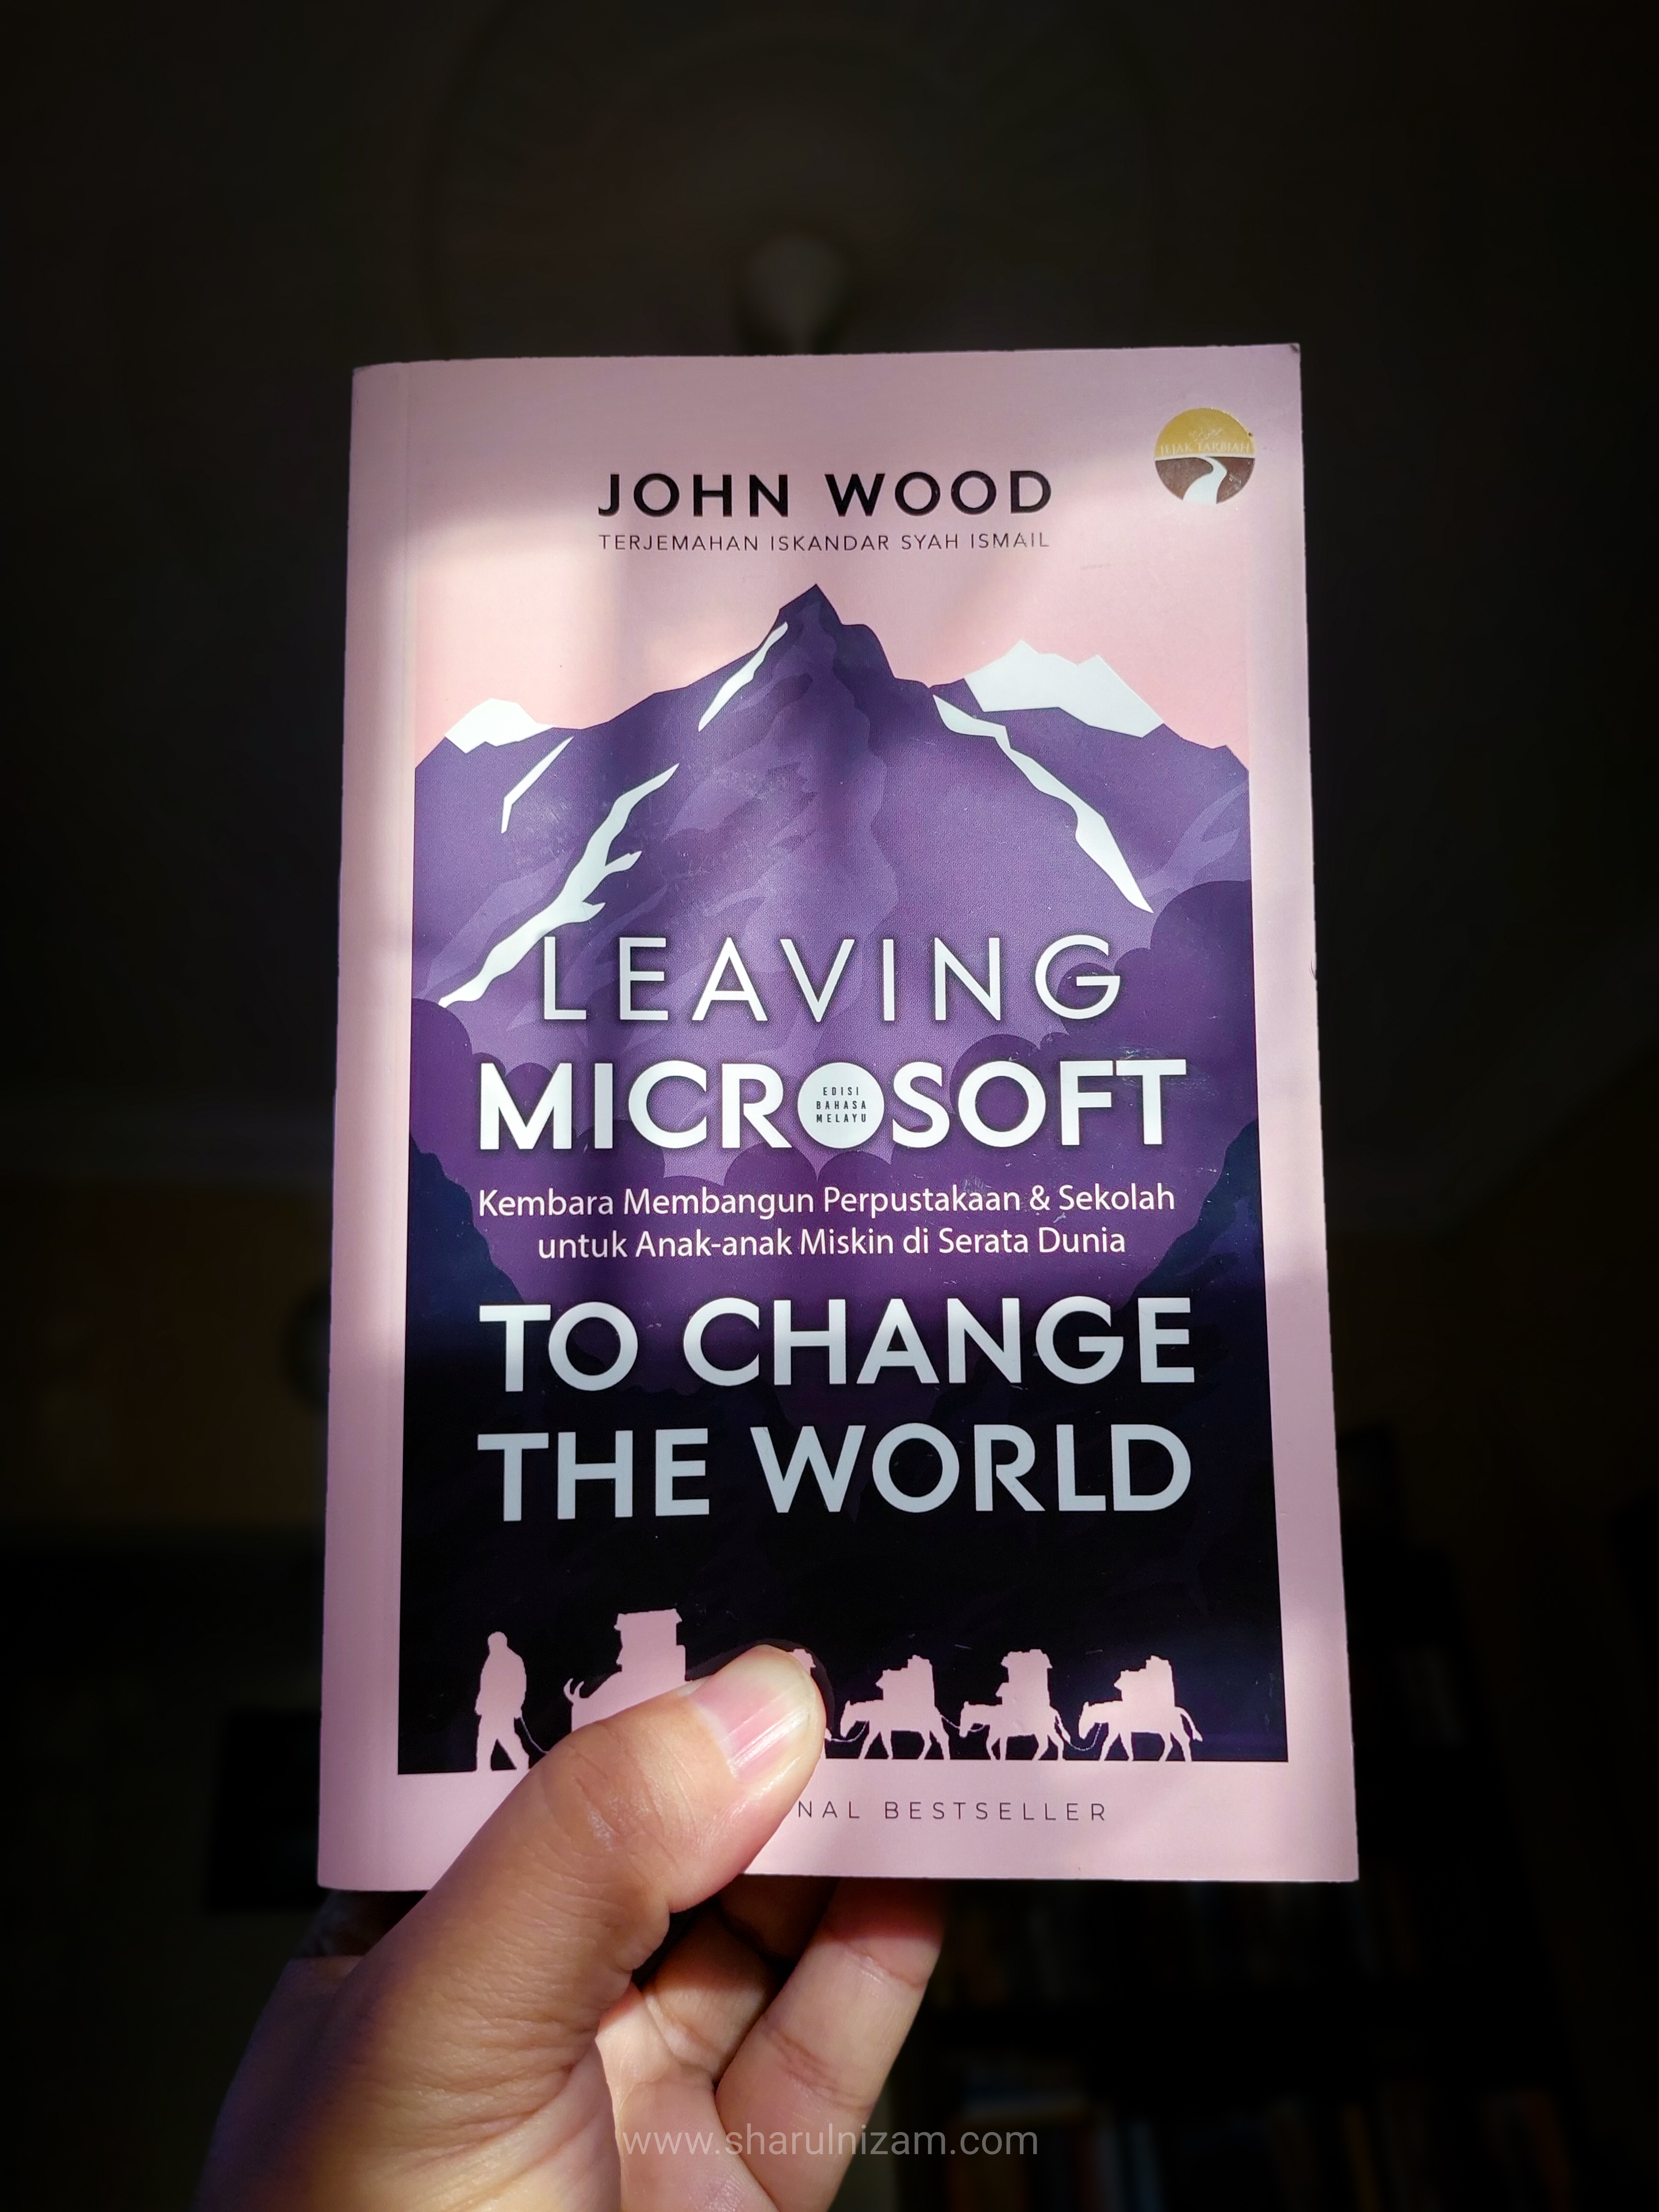 [Ulasan Buku] Leaving Microsoft To Change The World (oleh John Wood)